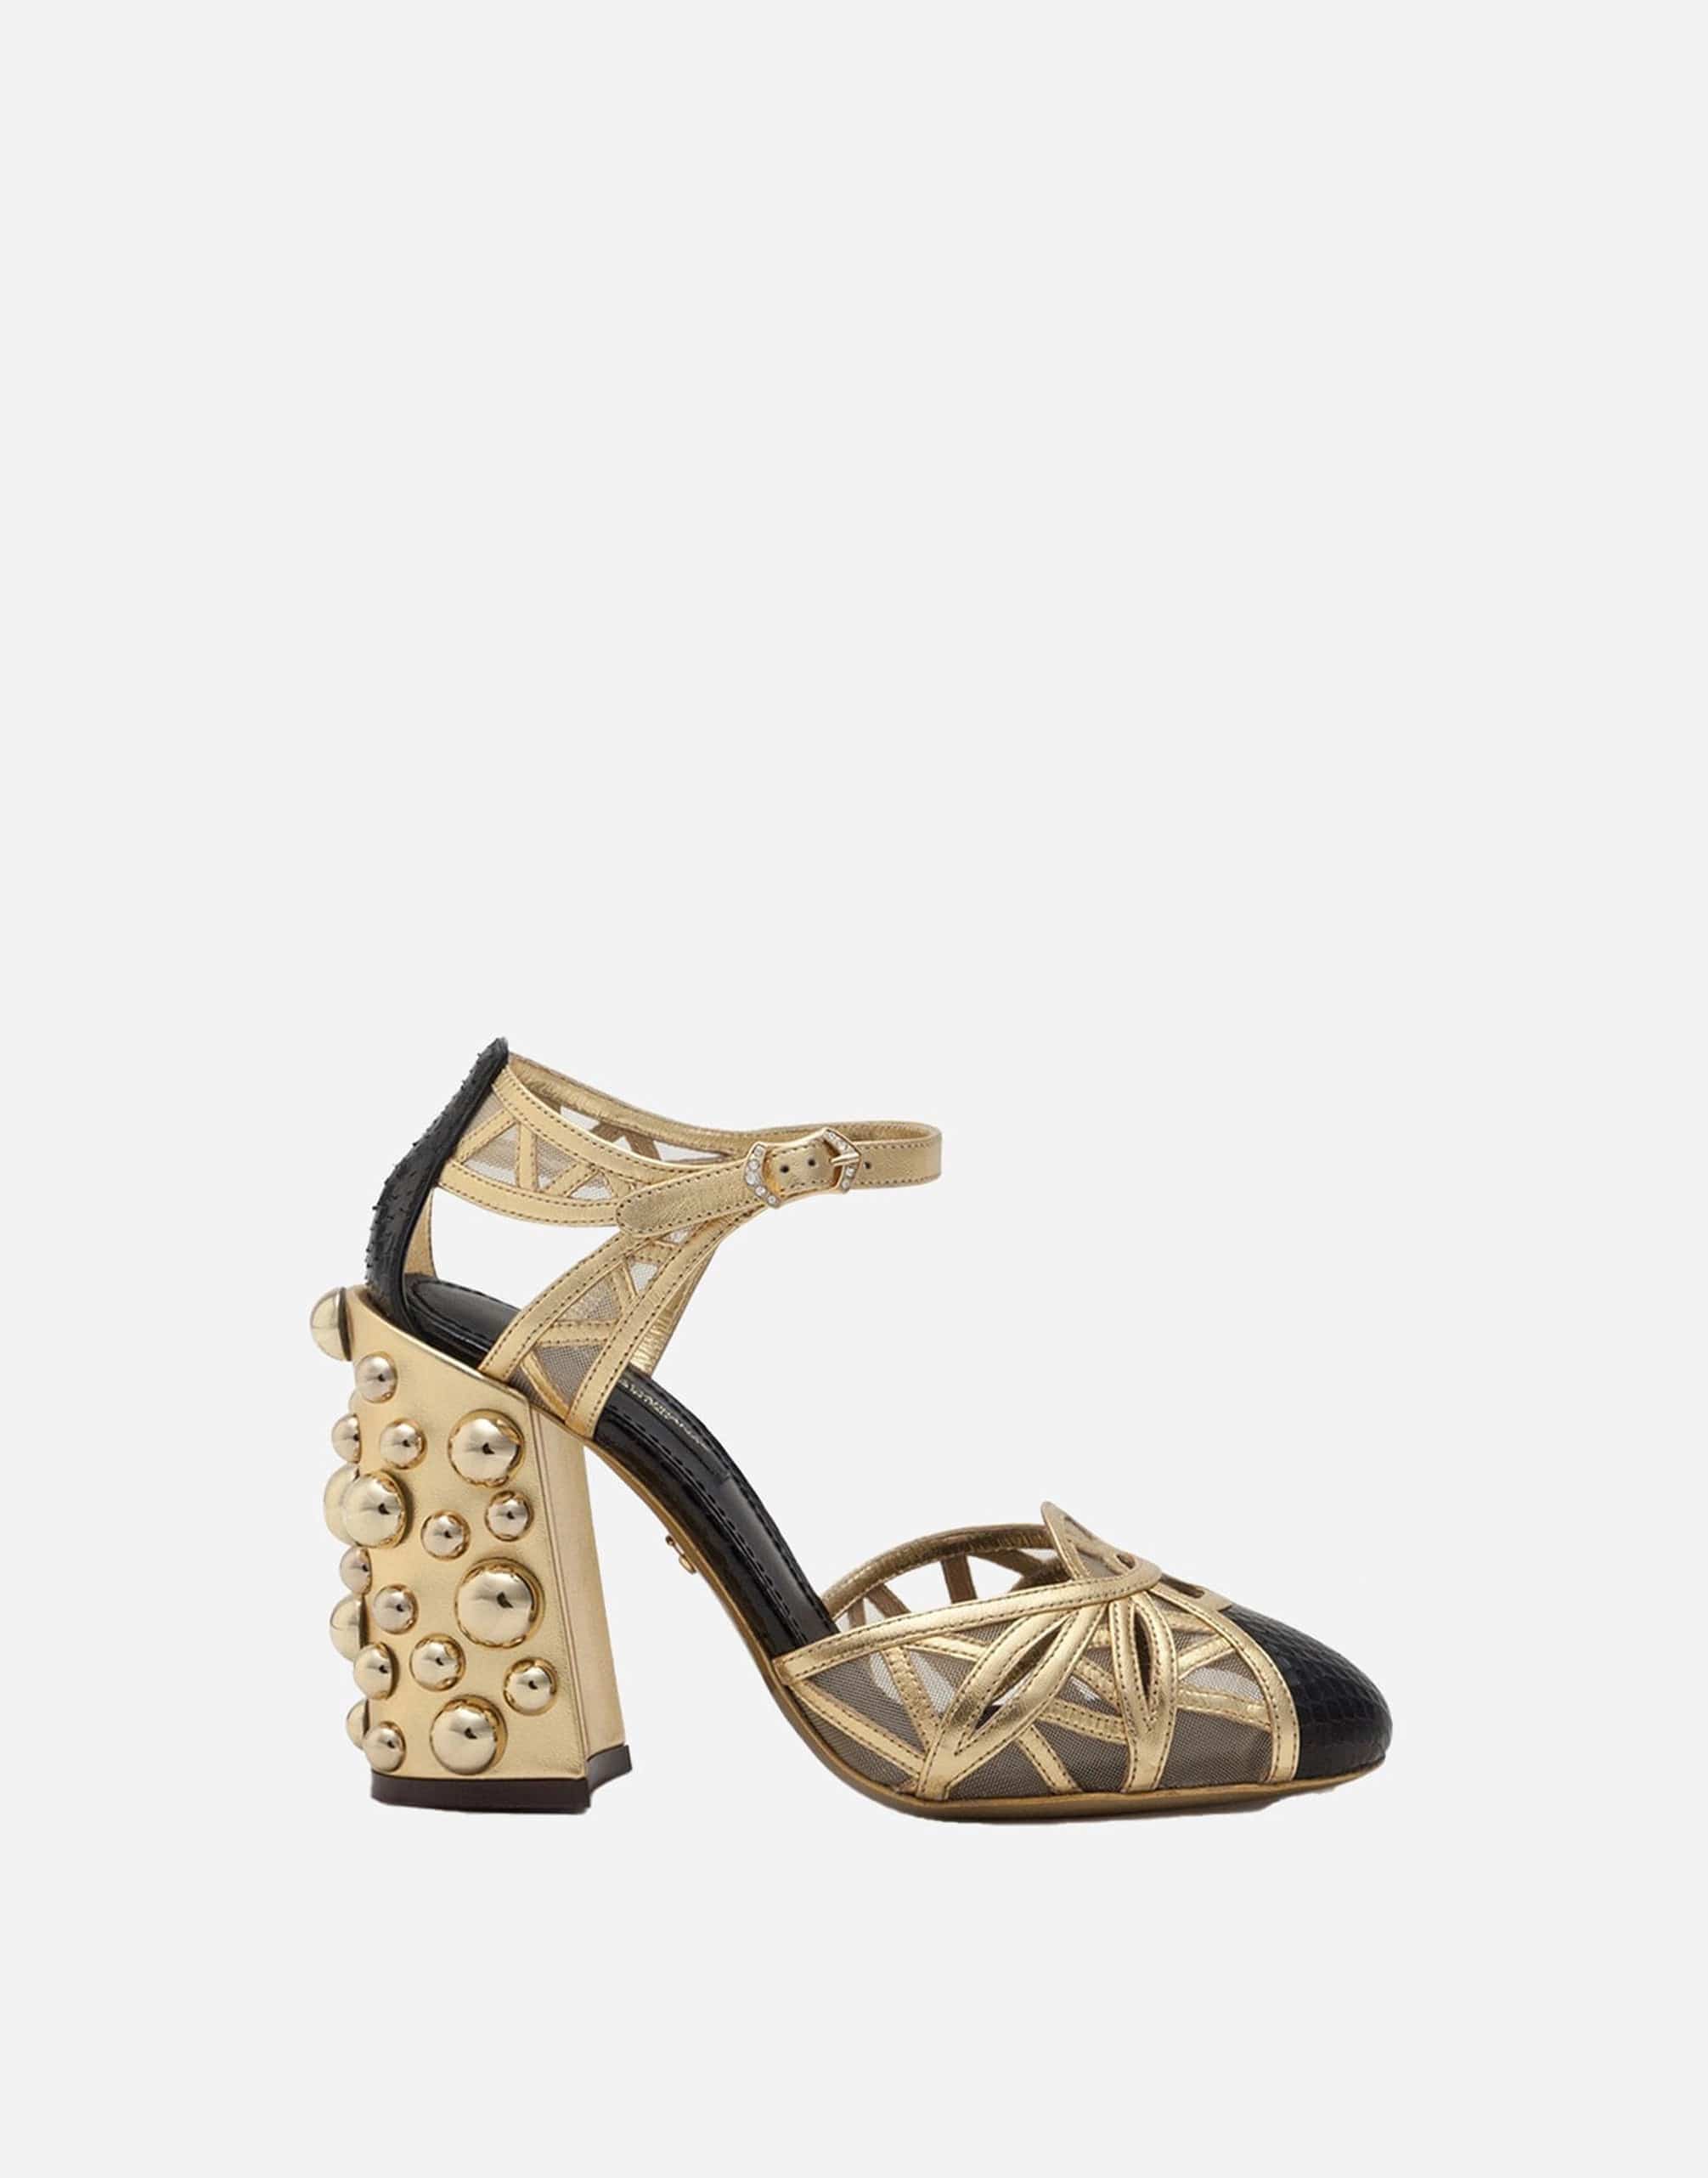 Dolce & Gabbana Stud-Embellishment Round-Toe Pumps